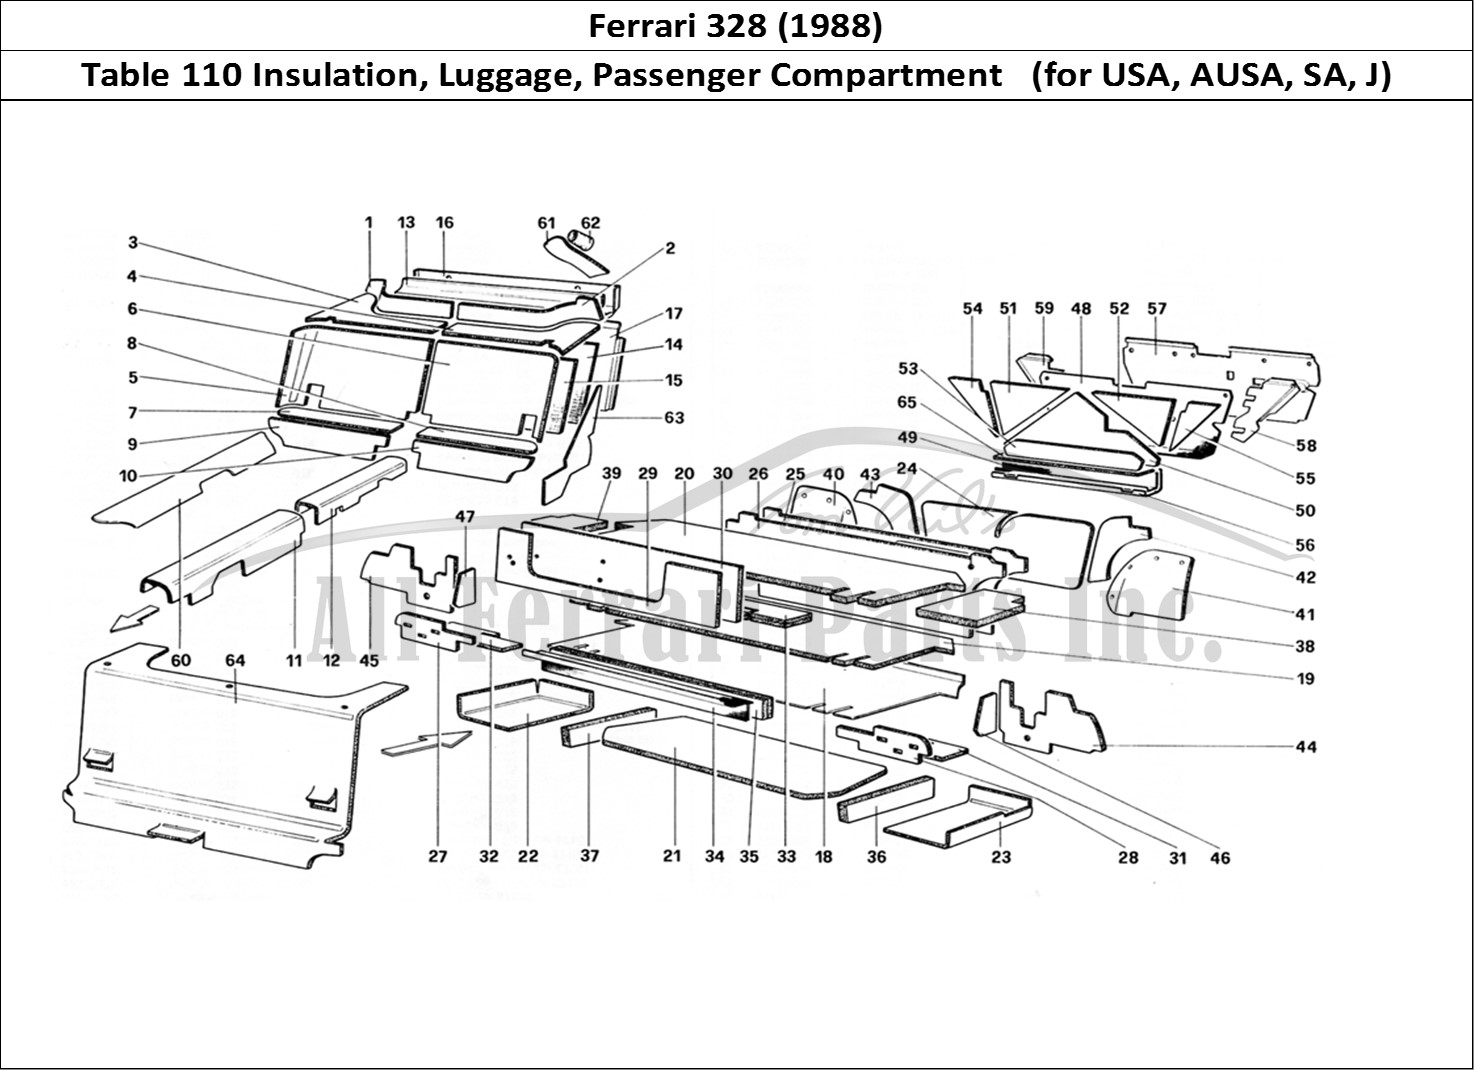 Ferrari Parts Ferrari 328 (1988) Page 110 Luggage and Passenger Com